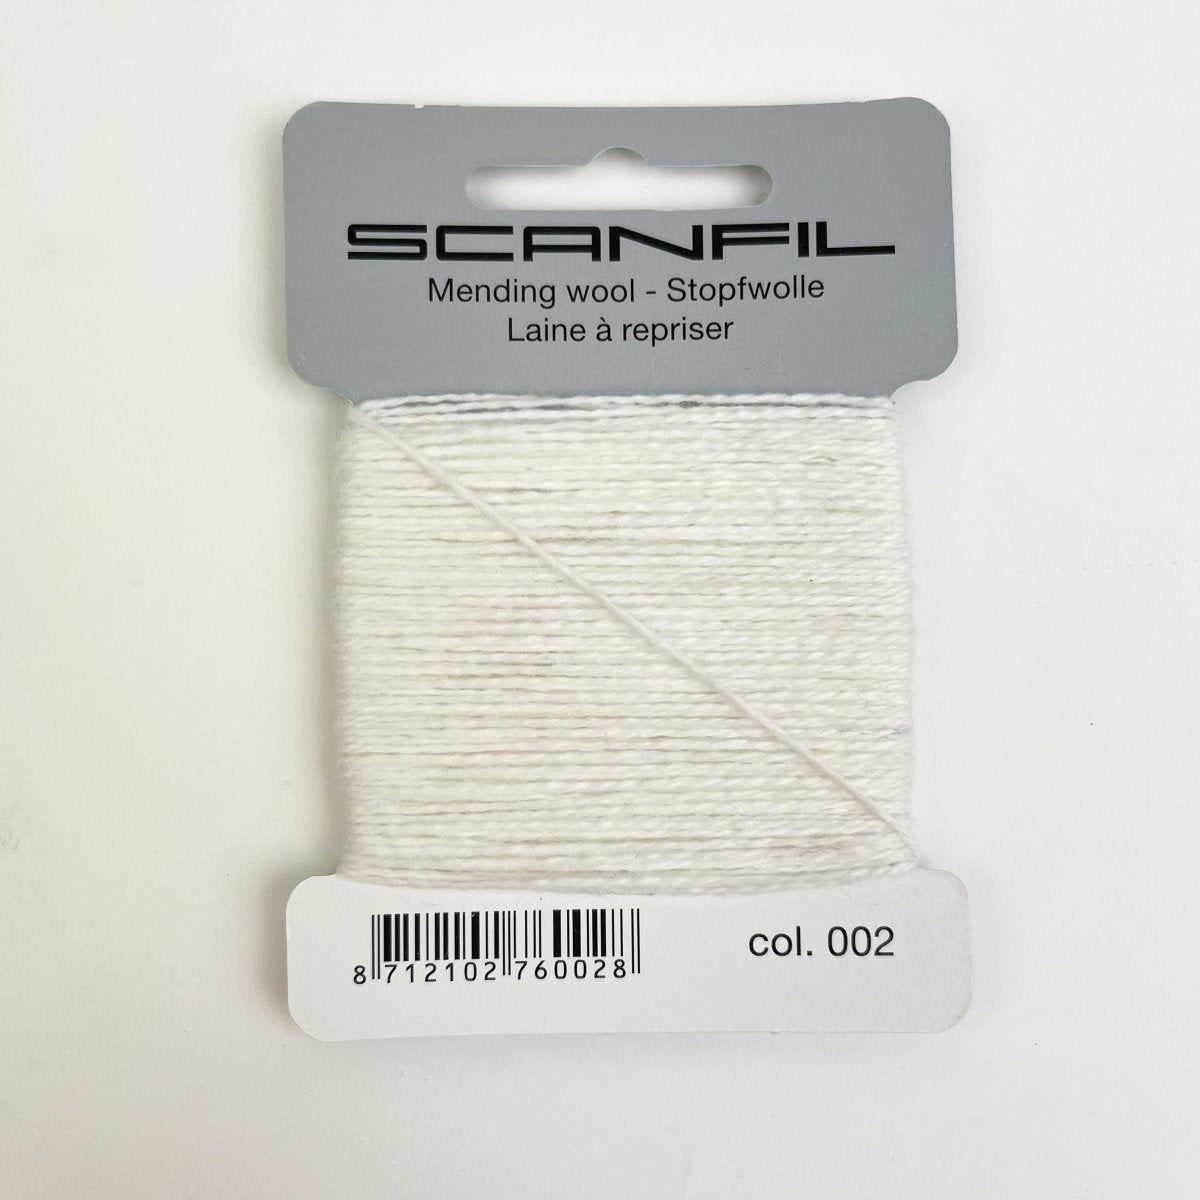 Scanfil - Mending Wool - Sewing Gem